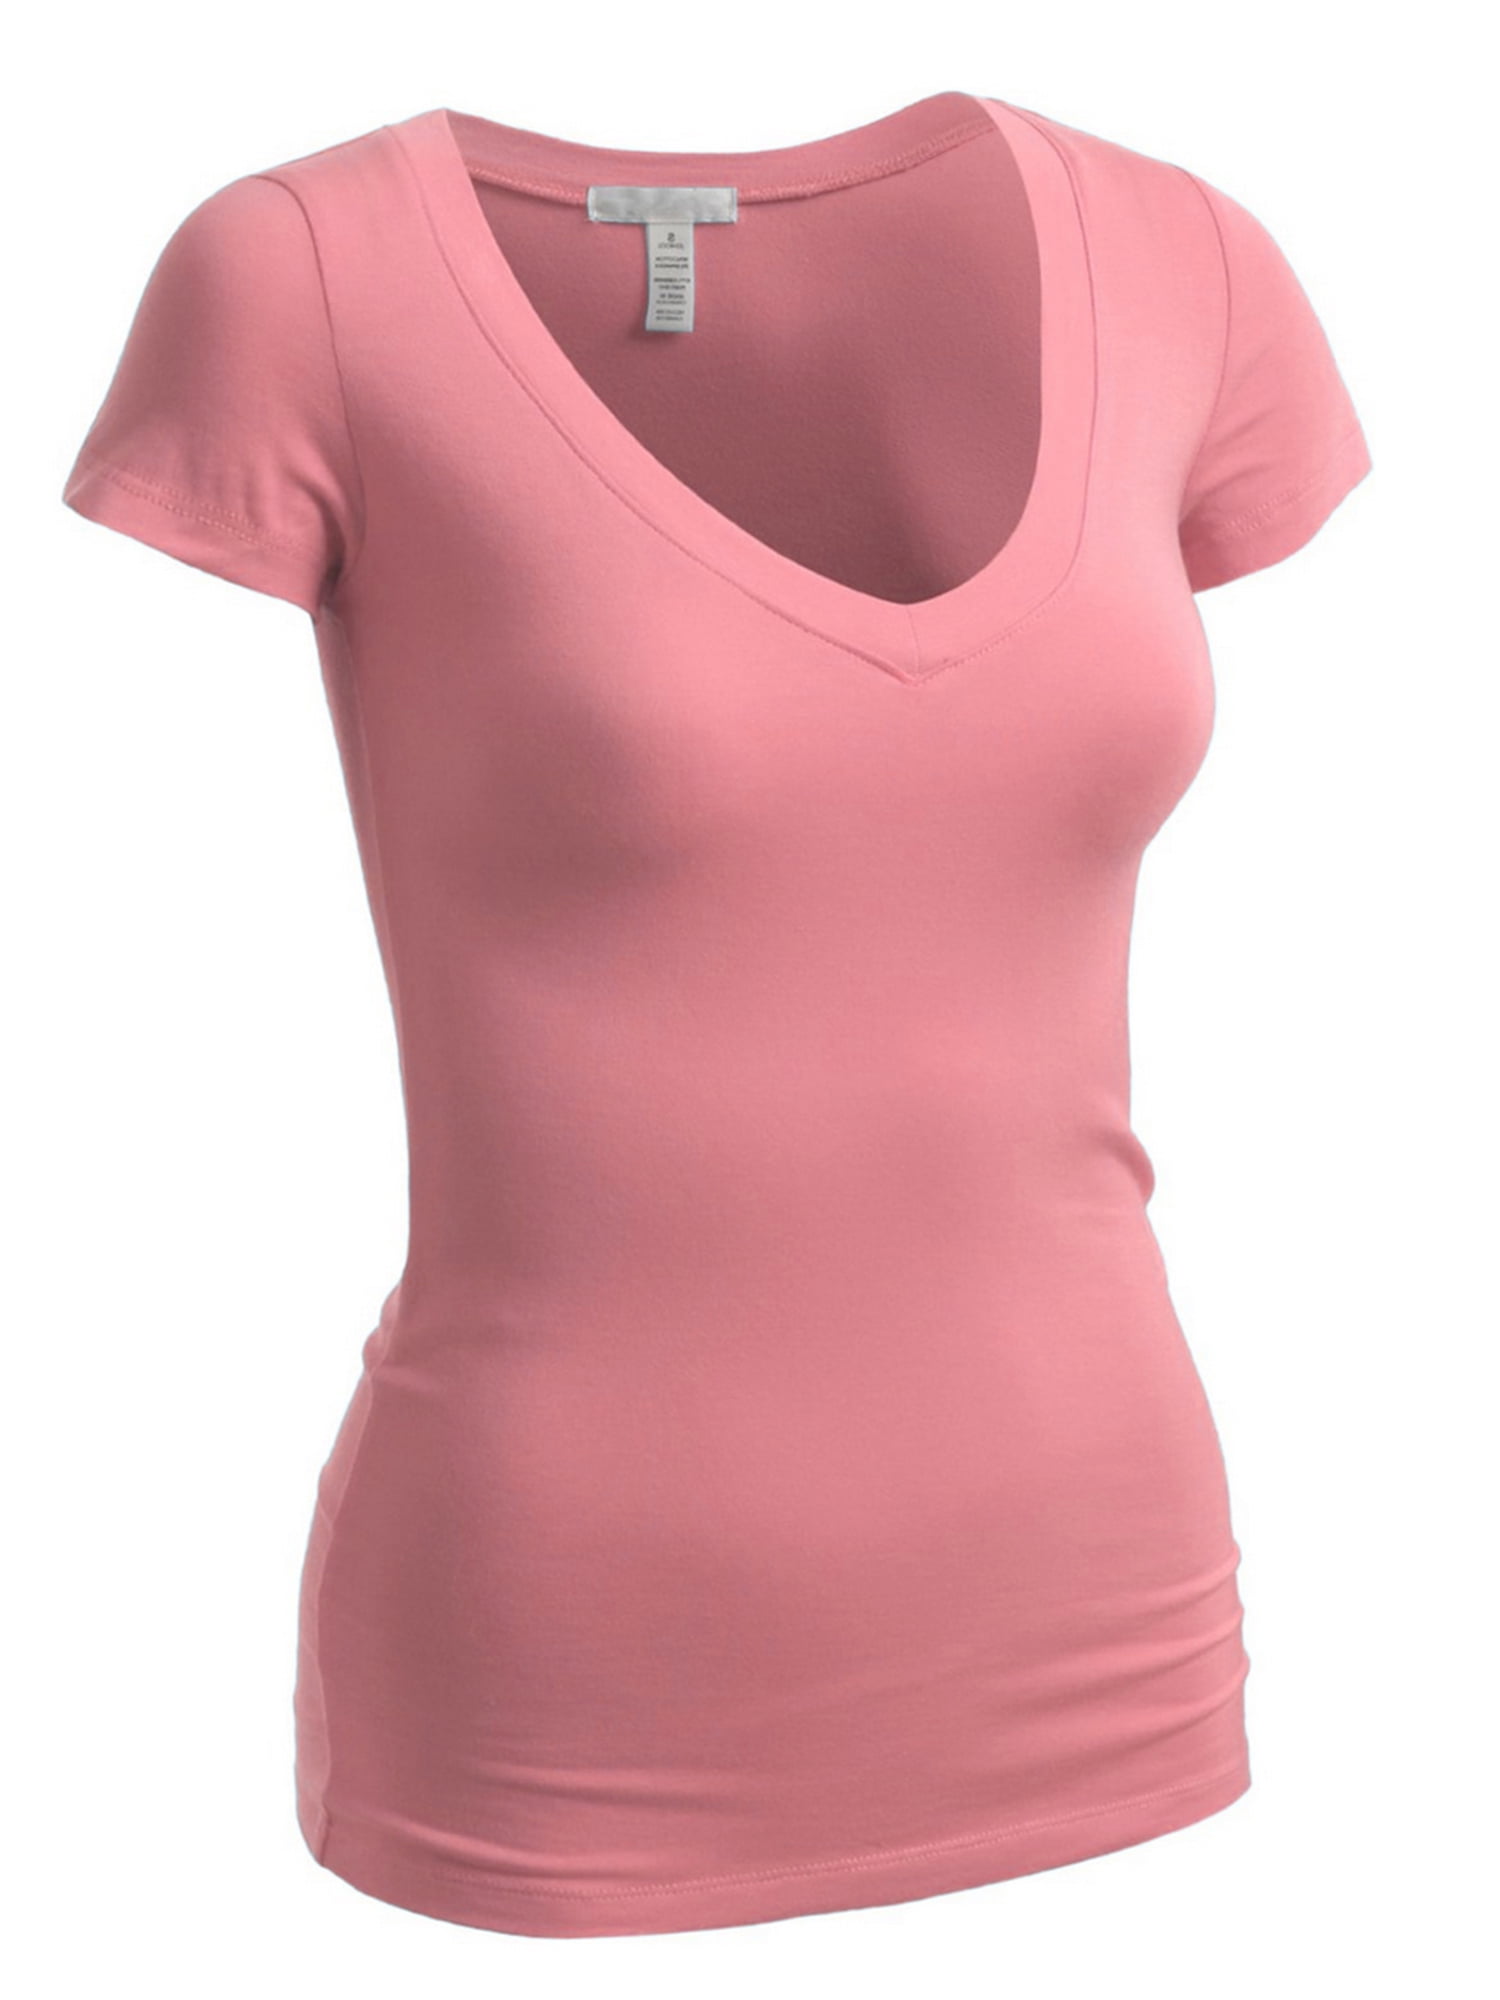 Emmalise Women's Plain Short Sleeve T-Shirt V-Neck Top Junior & Plus ...